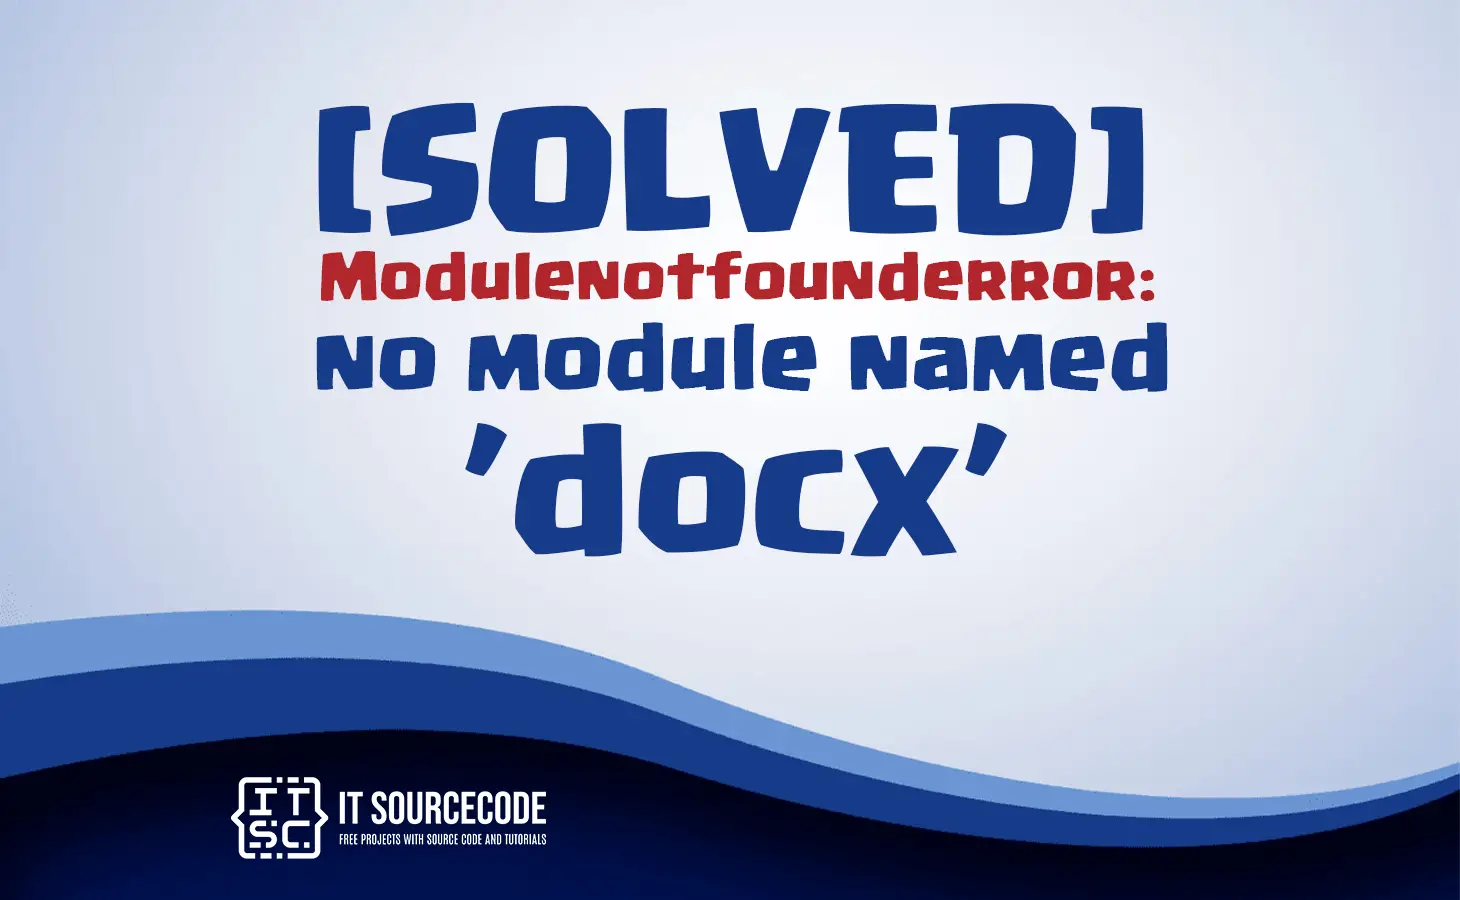 Modulenotfounderror: no module named docx